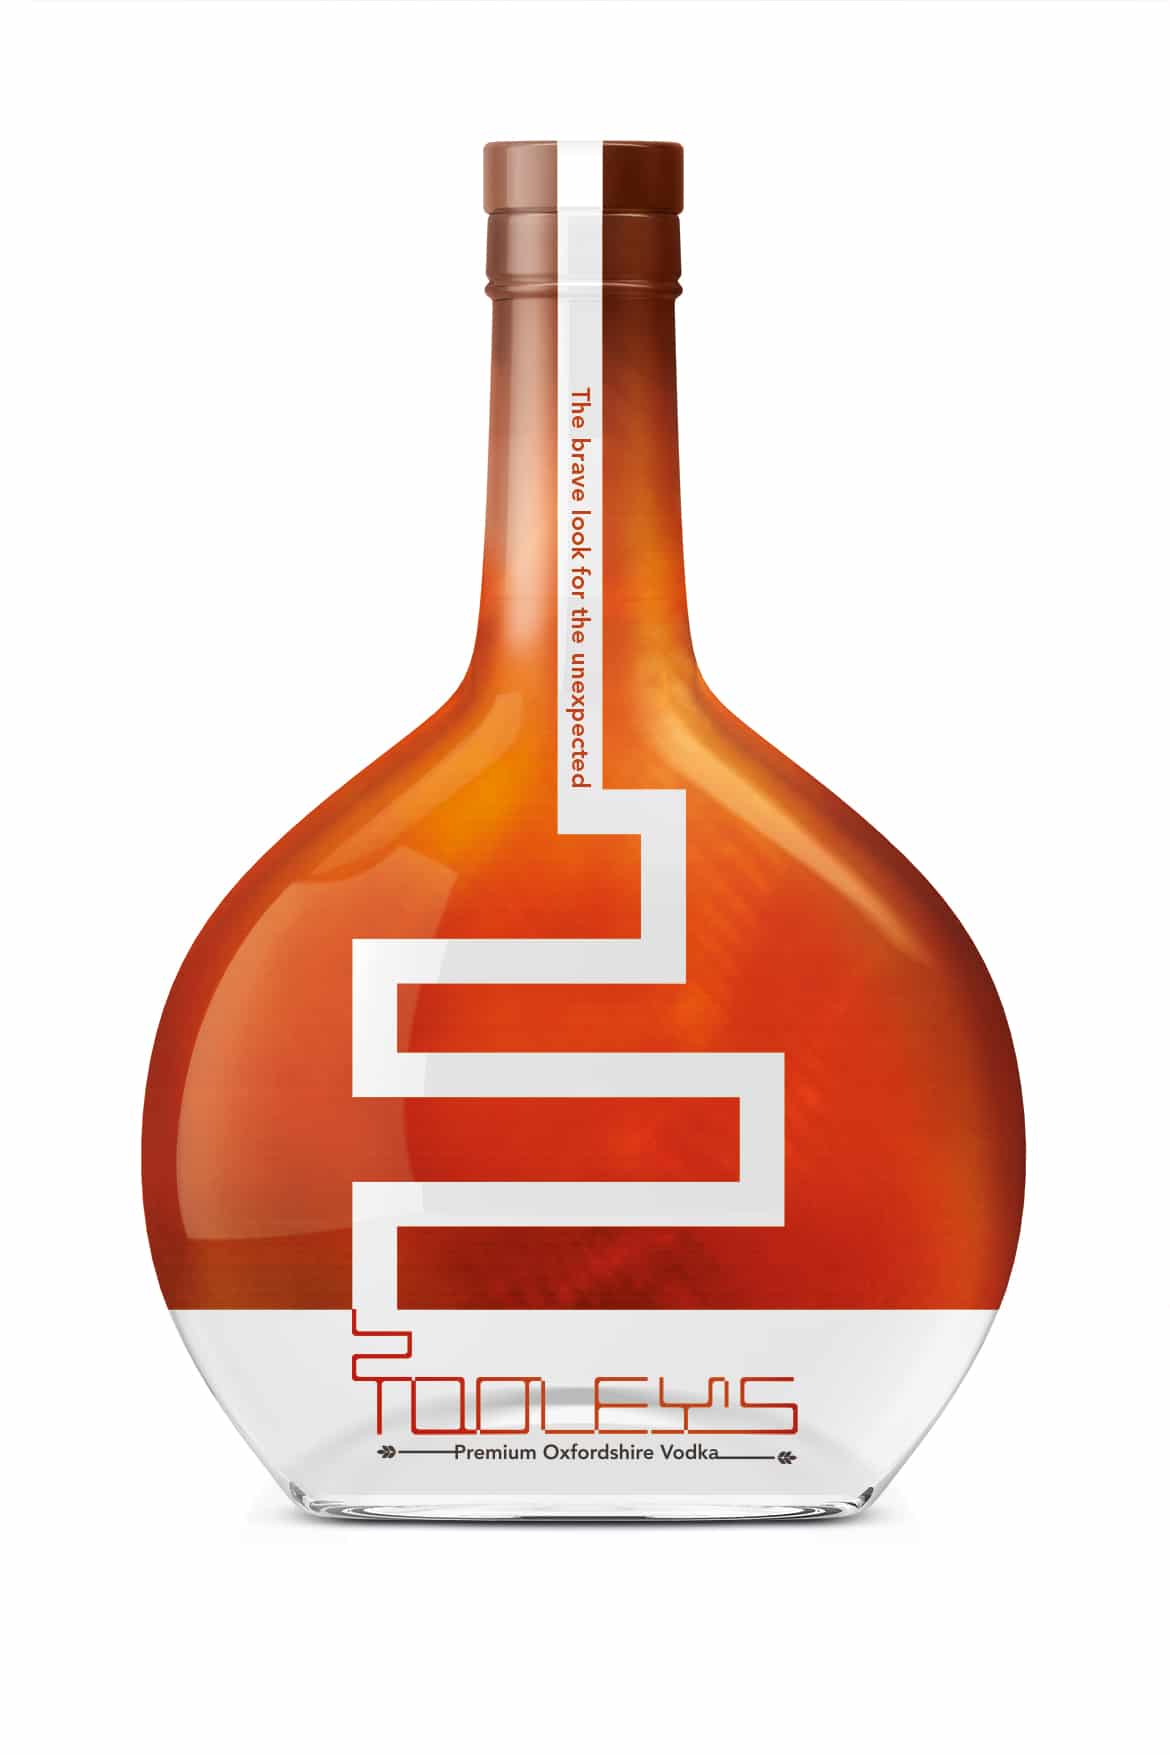 Tooleys-Gin-Bottle-Design